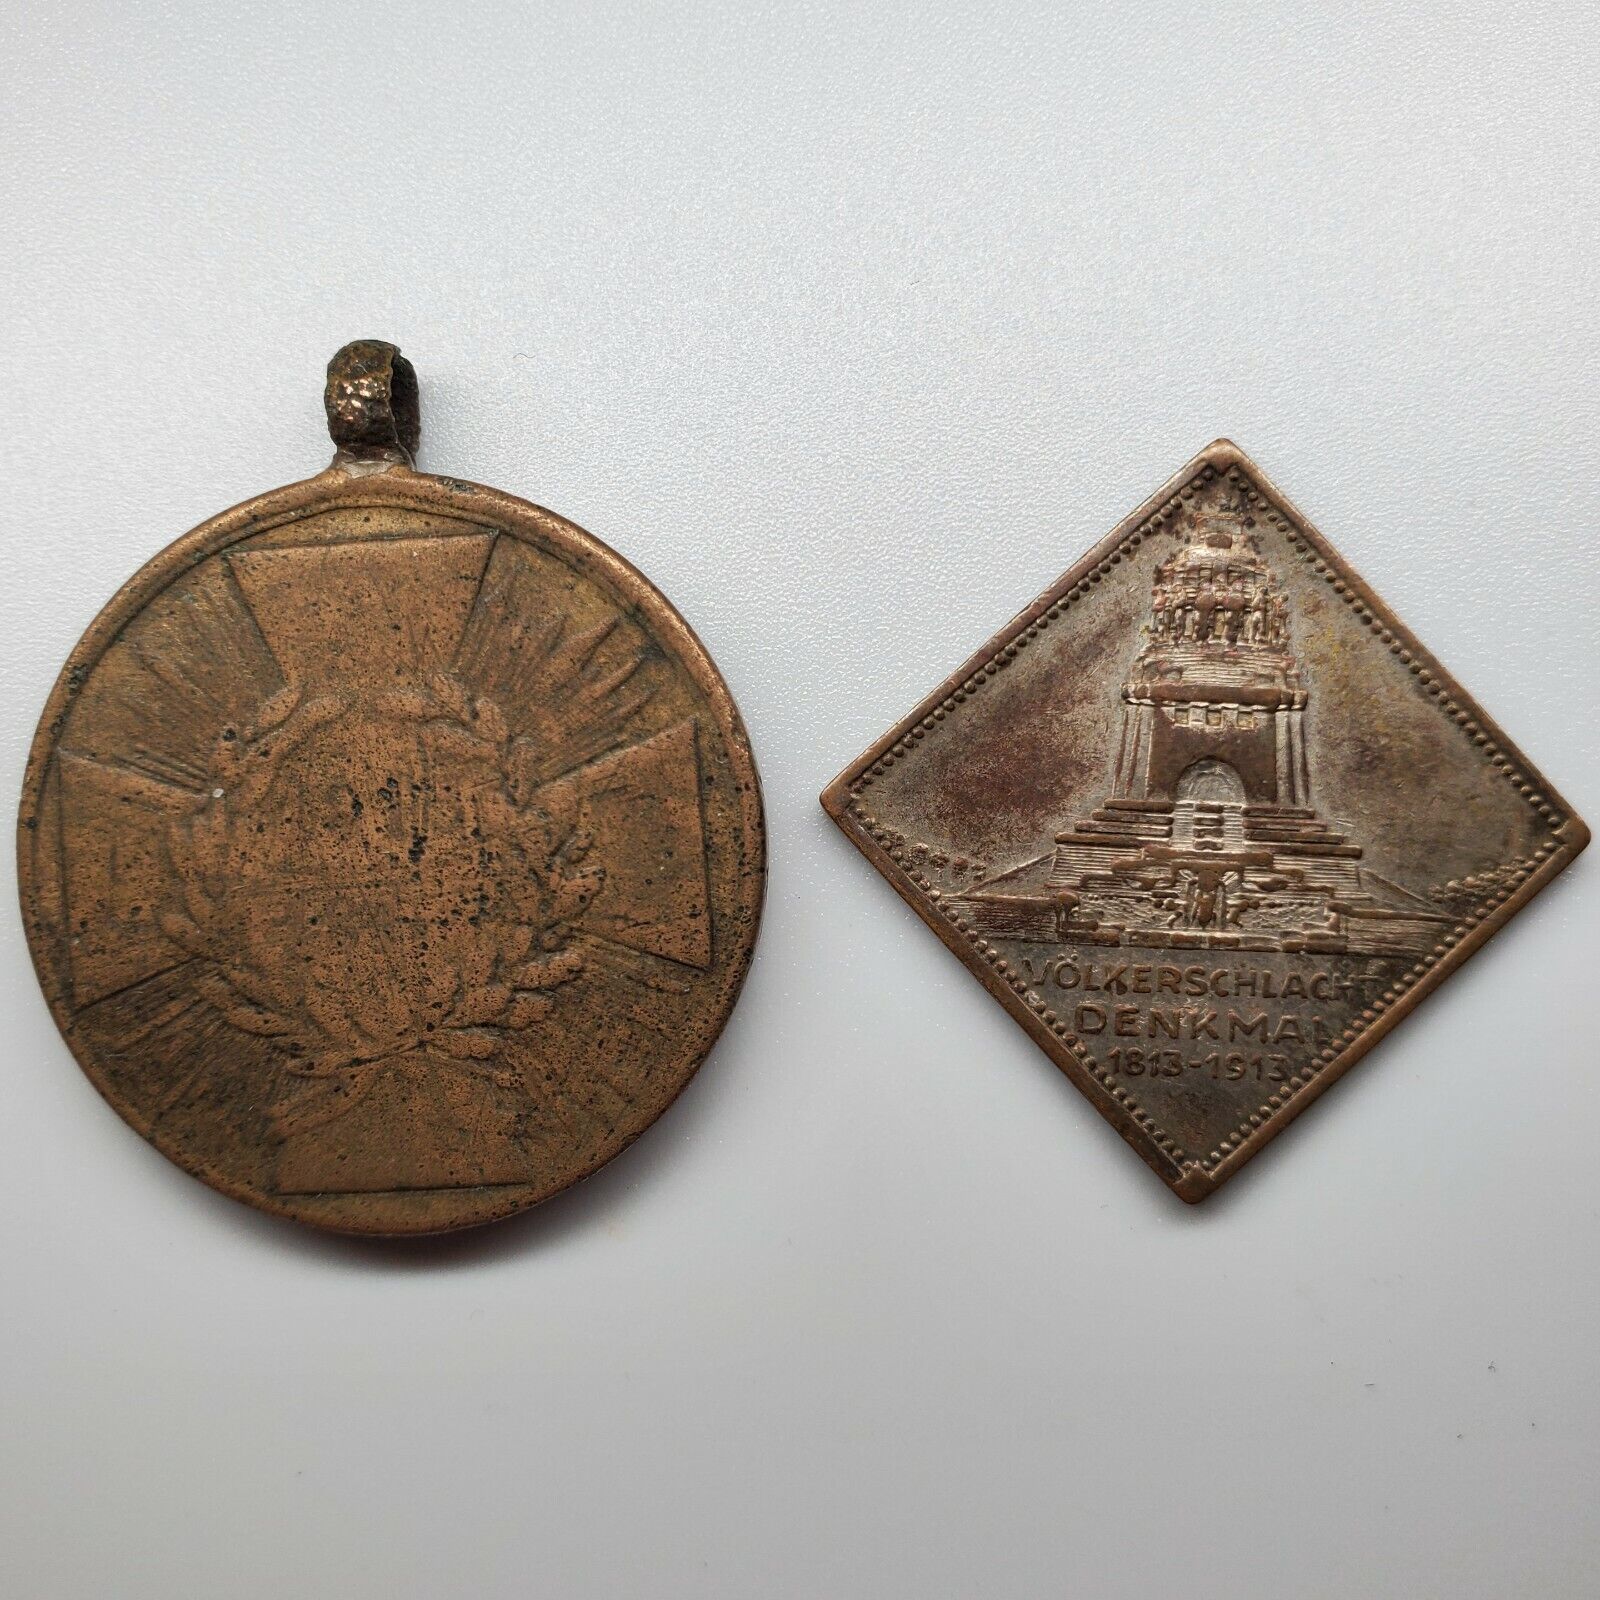 Napoleon bronze medal War 1813 1814 1913 German cannon award coin Leipzig army